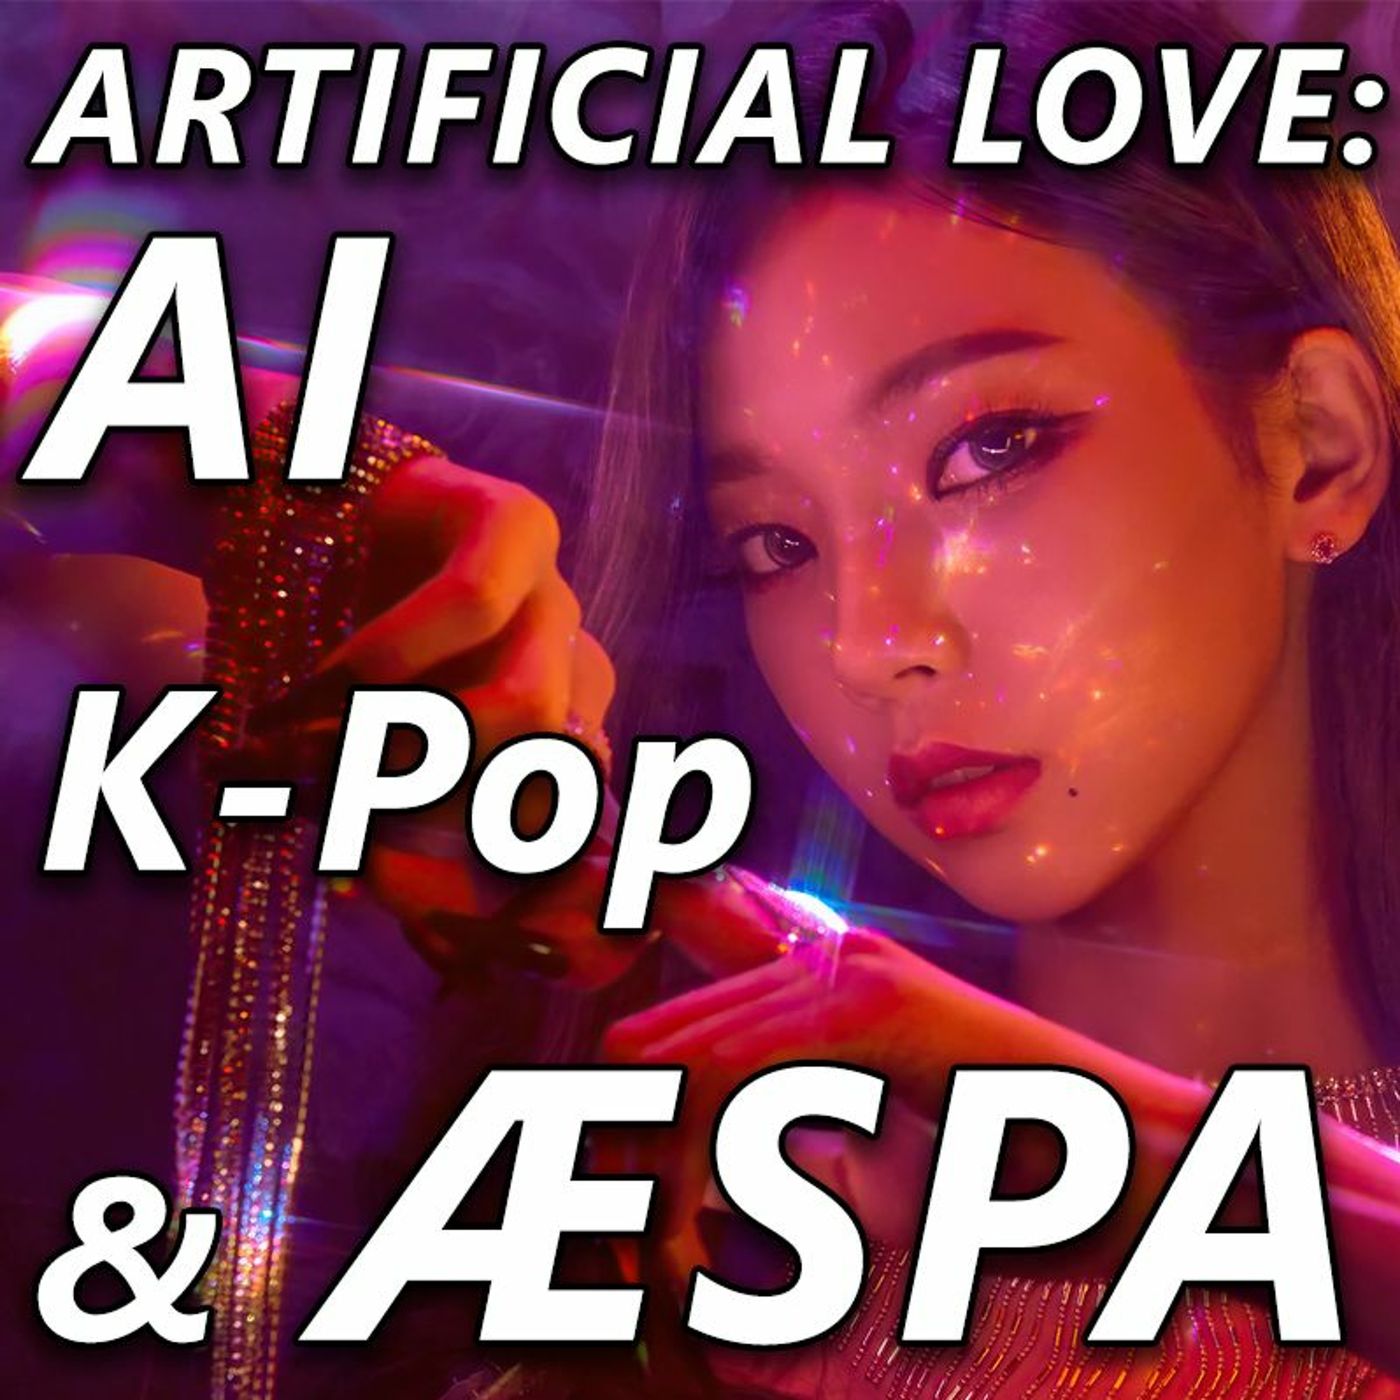 Artificial Love: K-pop, AI, and Aespa’s Concept